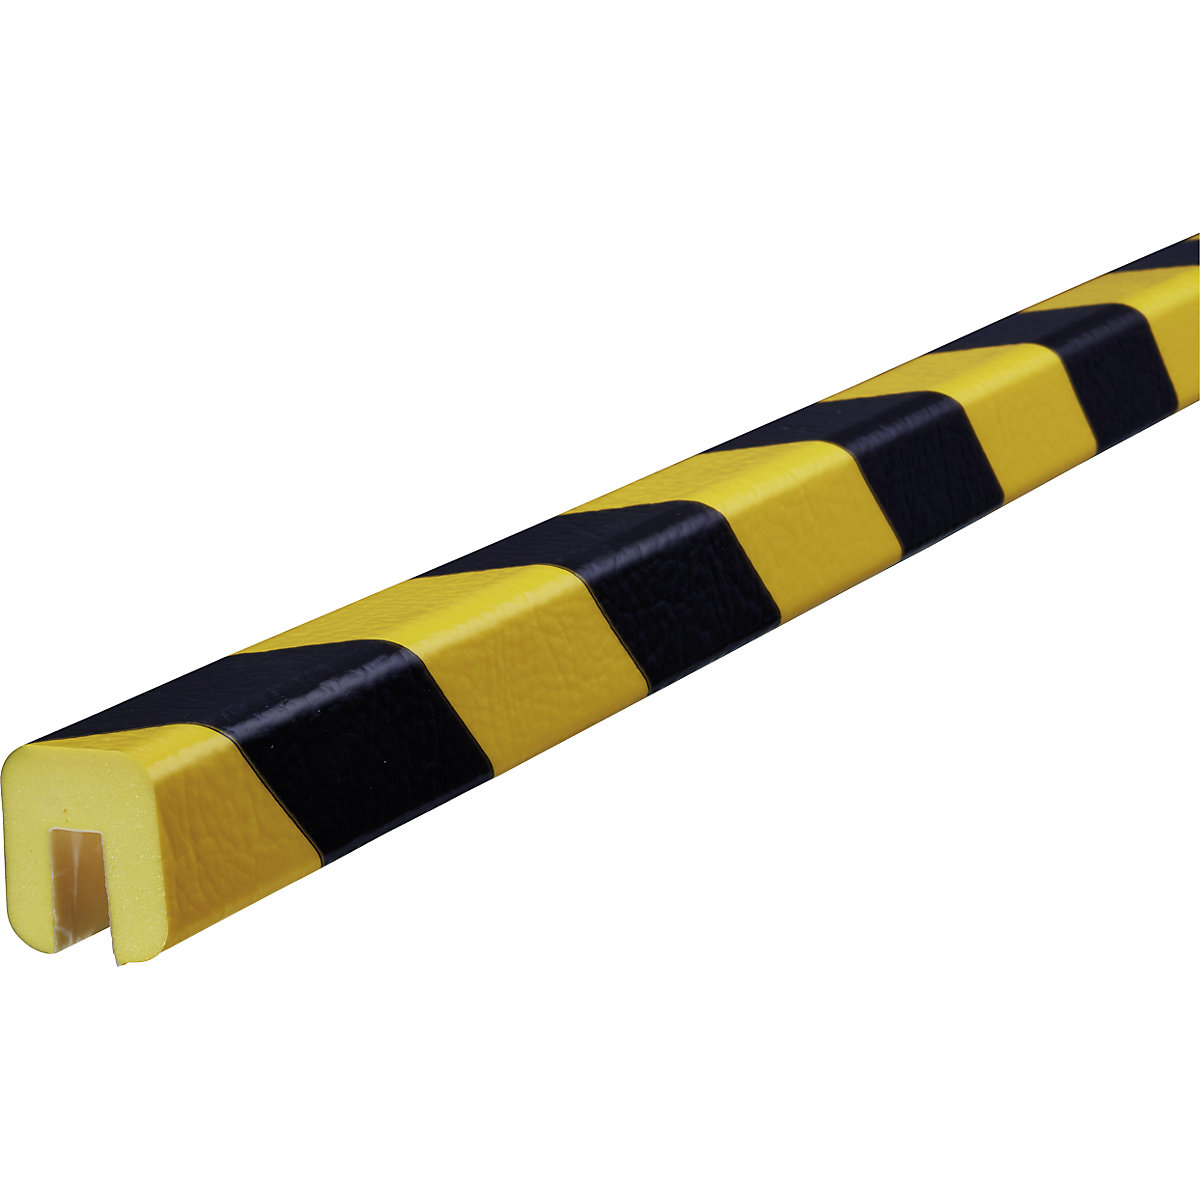 Knuffi® edge protection – SHG, type G, 1 m piece, black / yellow-19